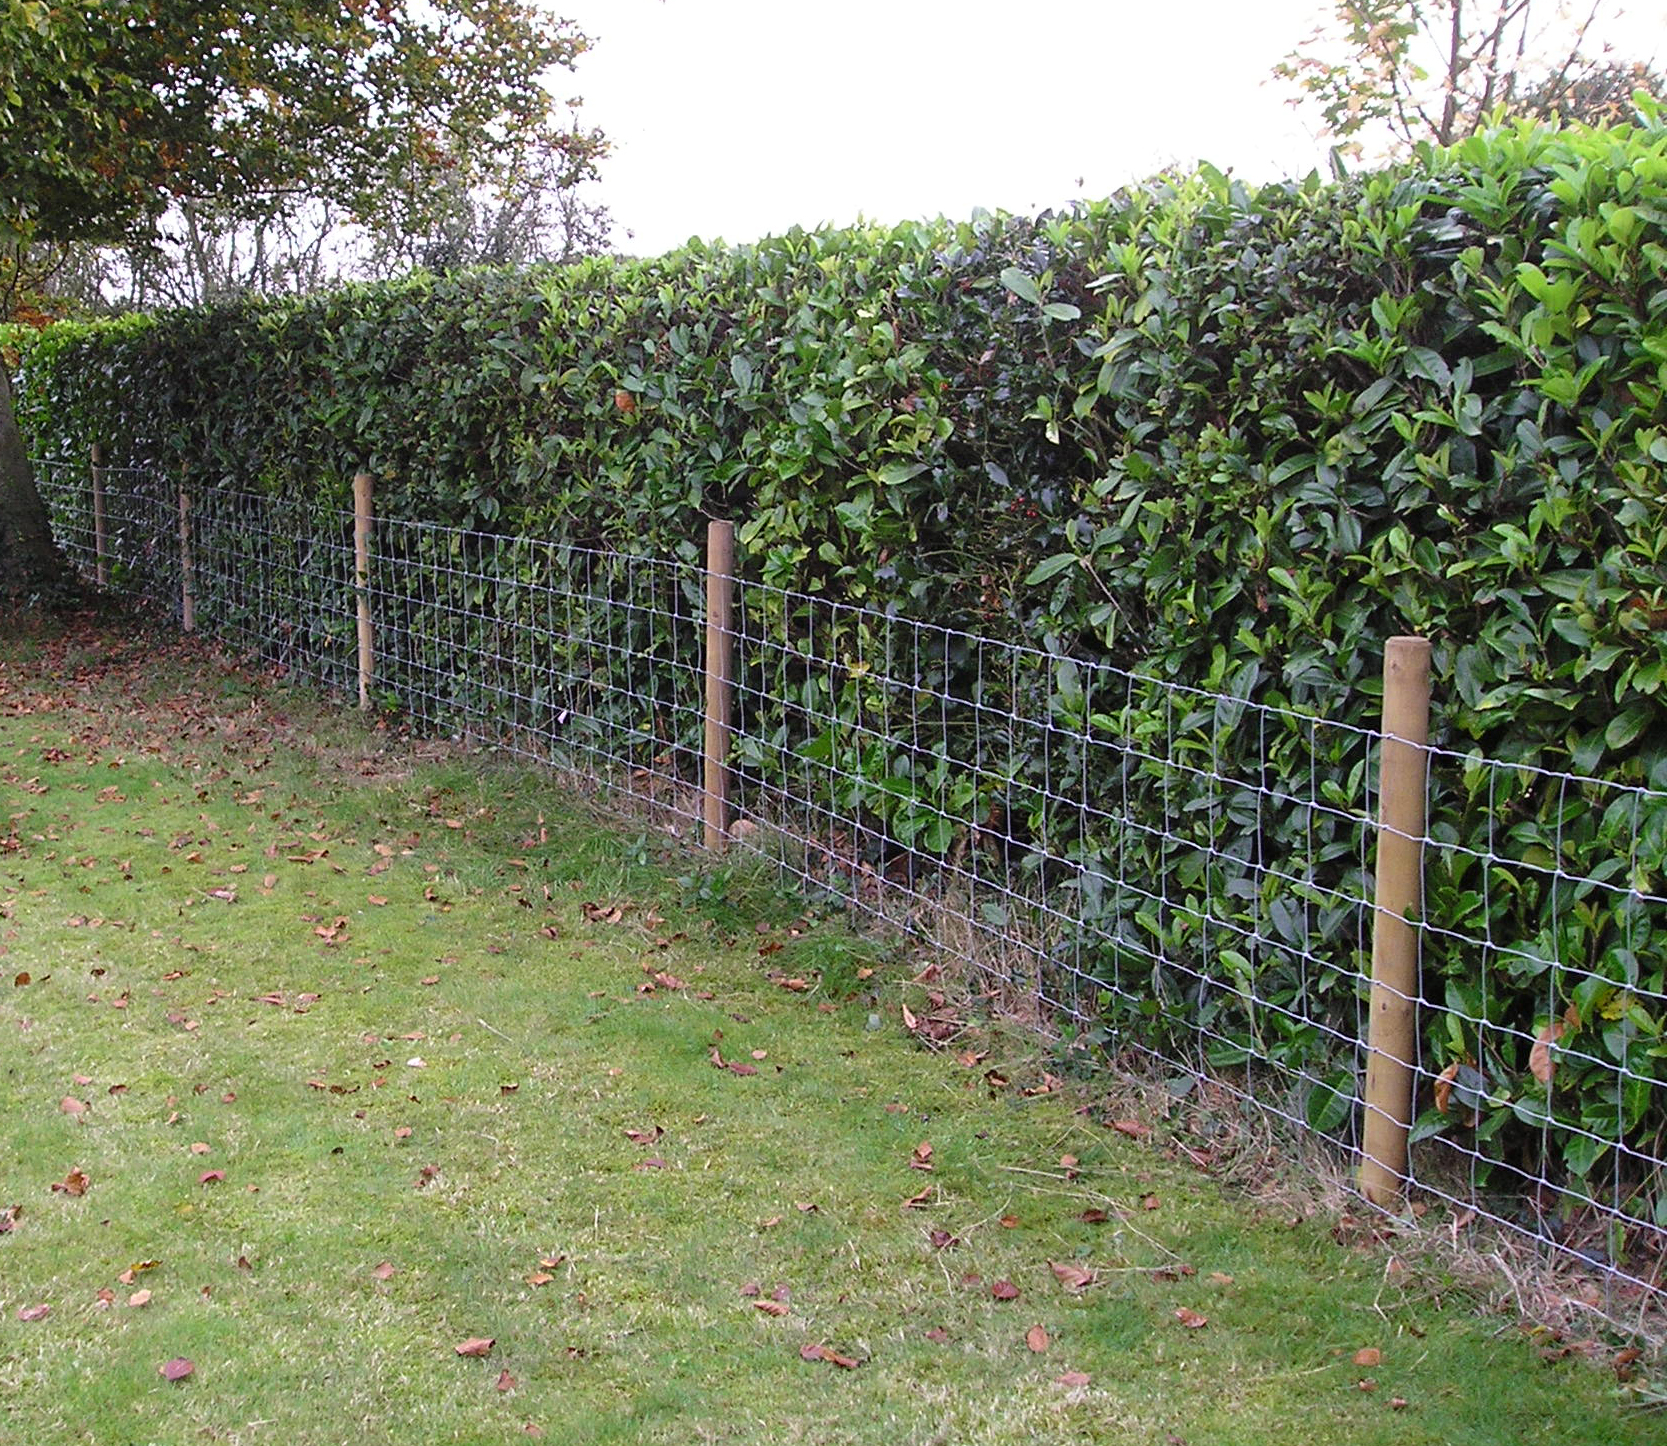 Stock netting hidden in a hedge